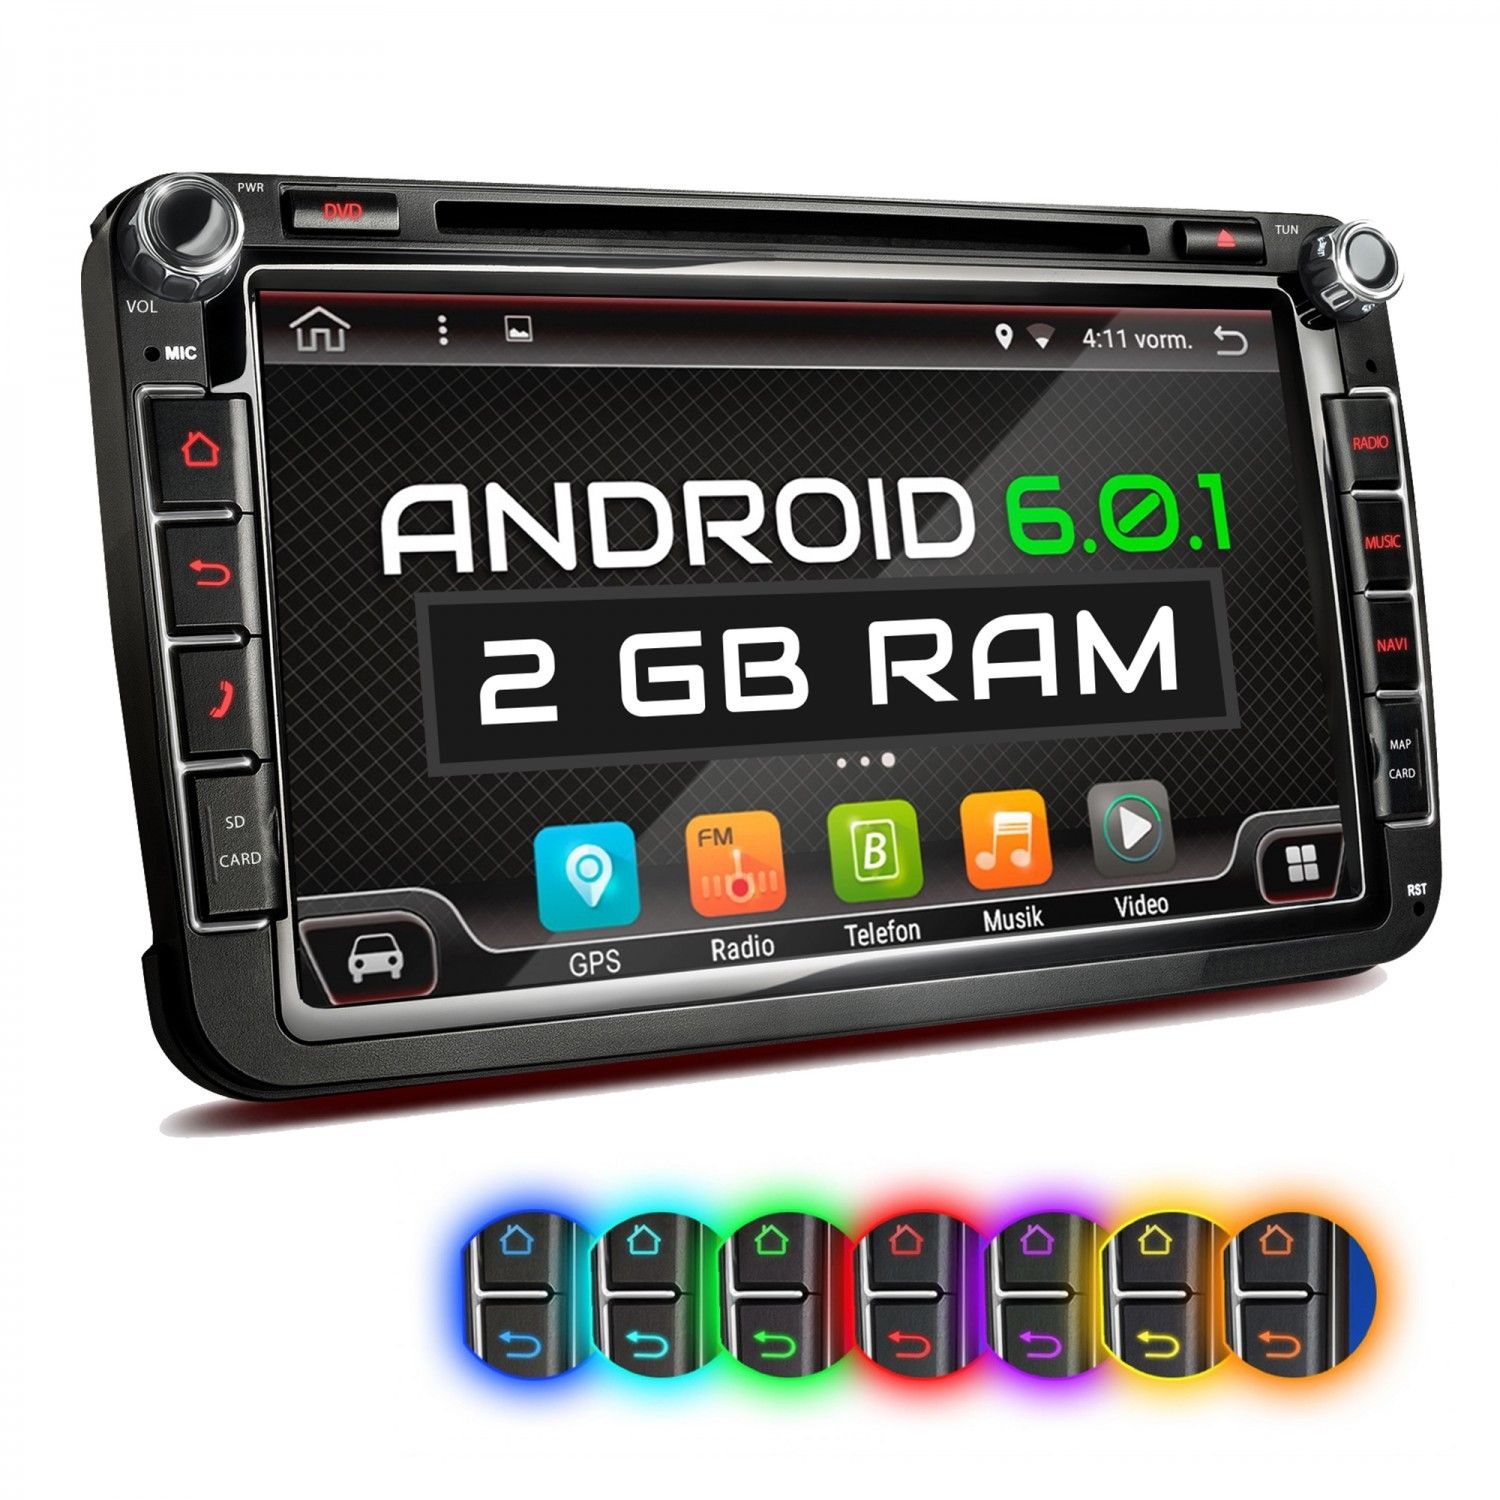 AUTORADIO MIT ANDROID 6.0.1 2GB RAM NAVI DVD USB WiFi PASSEND FÜR VW SEAT SKODA